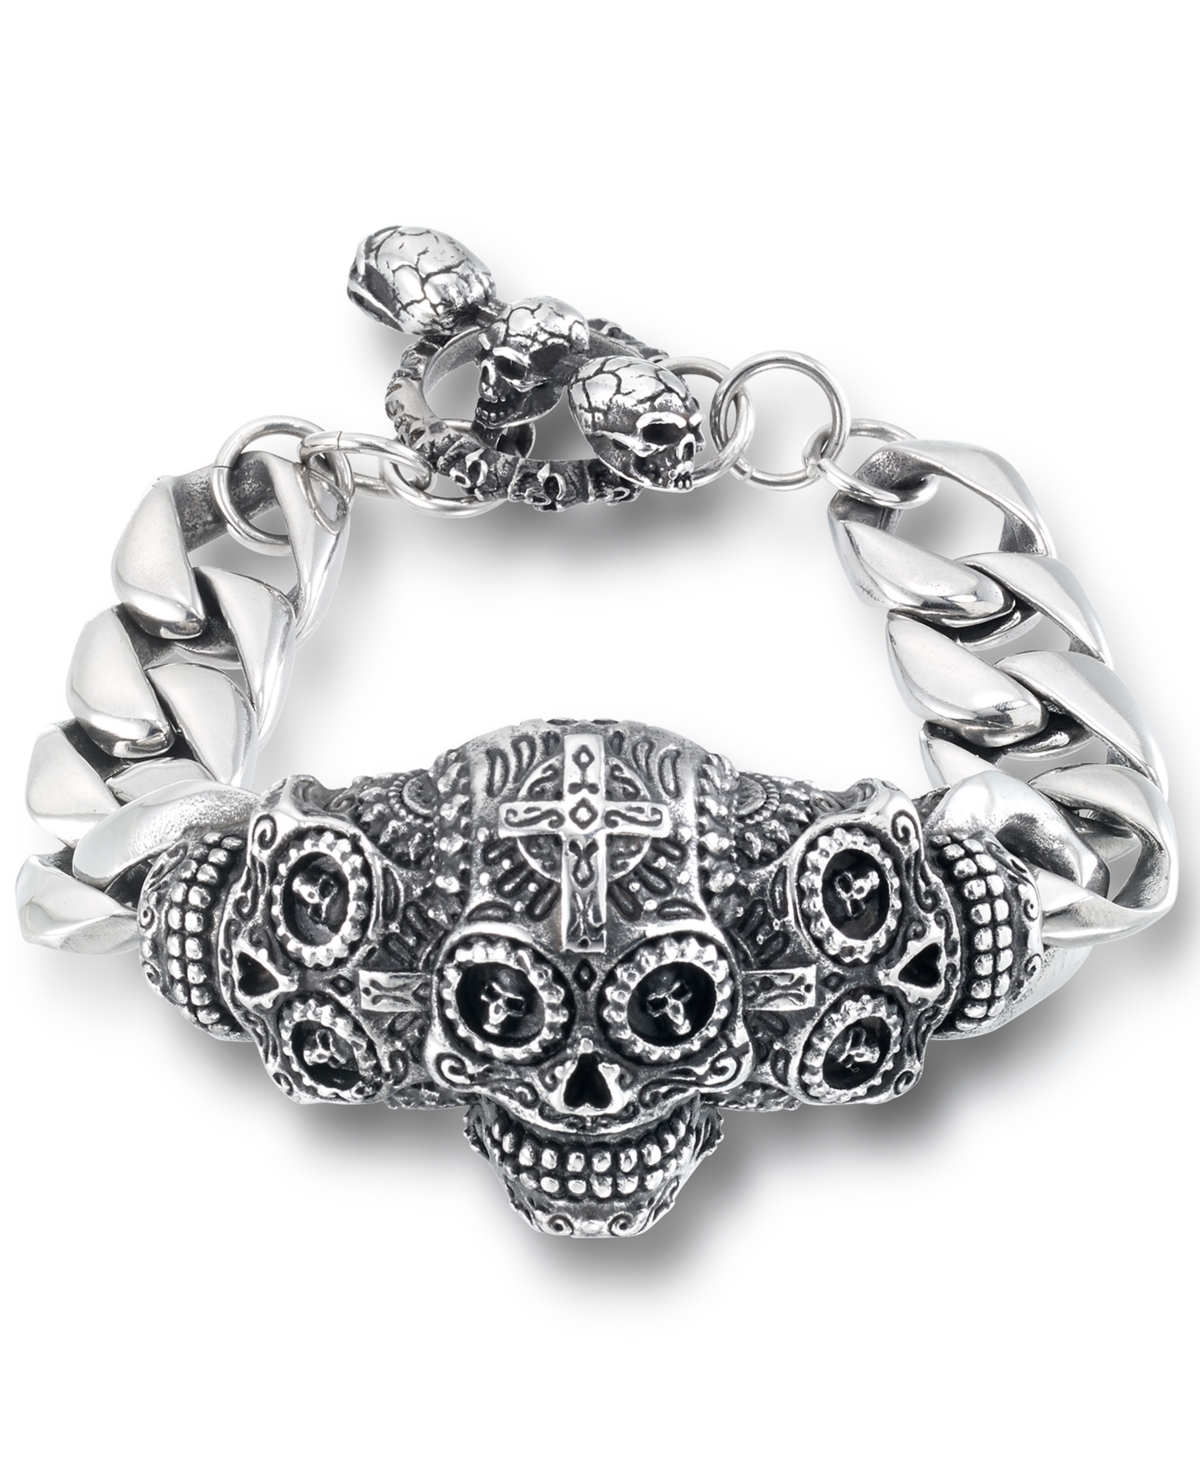 Men's Ornamental Skull Curb Link Bracelet in Stainless Steel - Stainless Steel